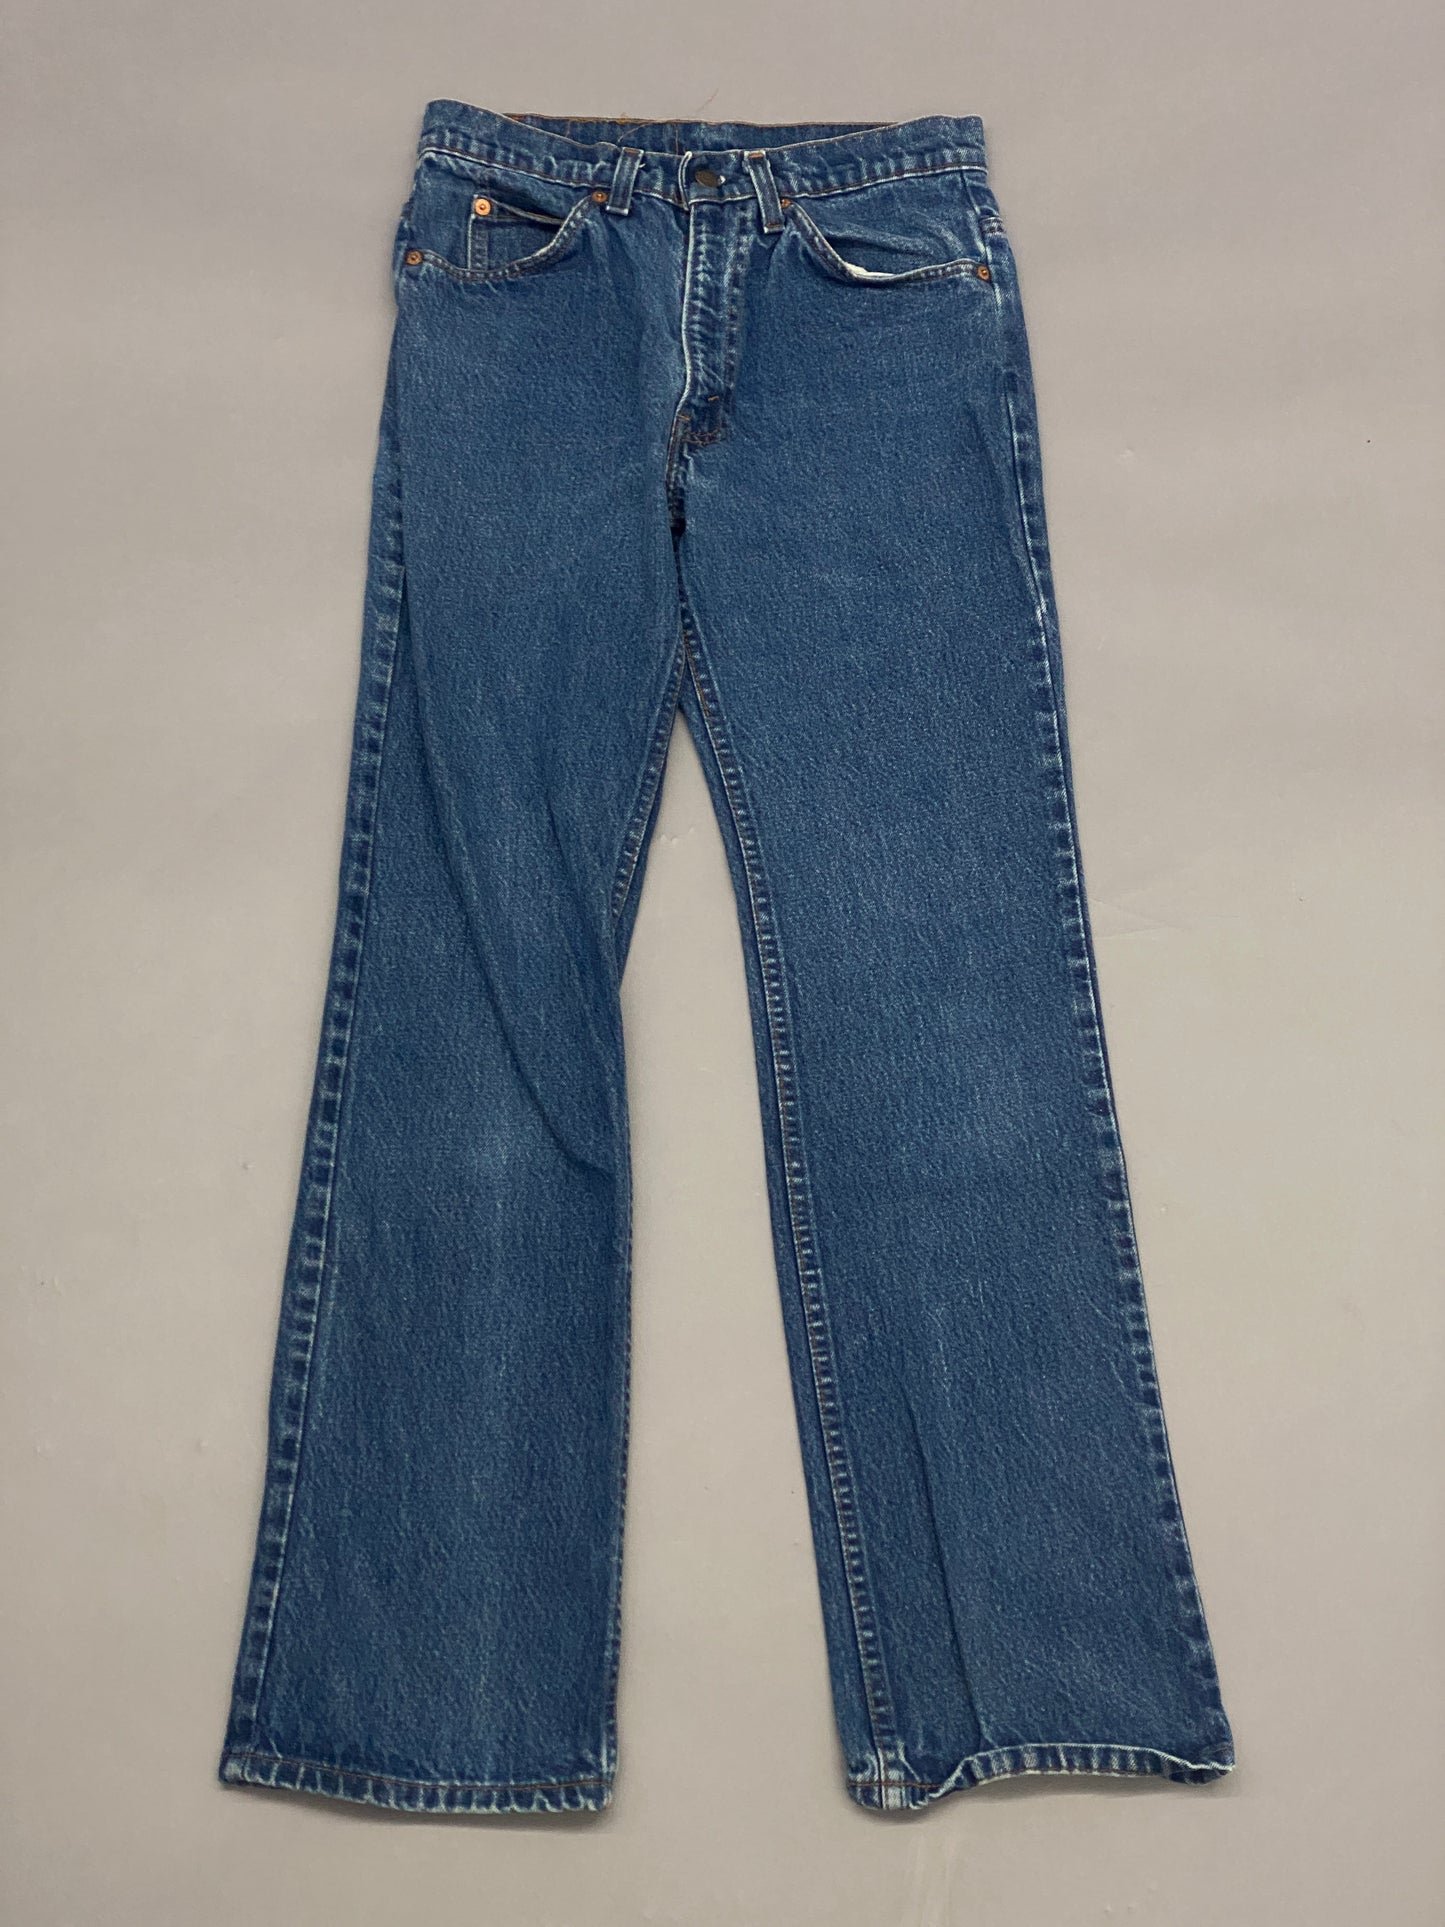 Levis Orange Tab Vintage Jeans - 30x31